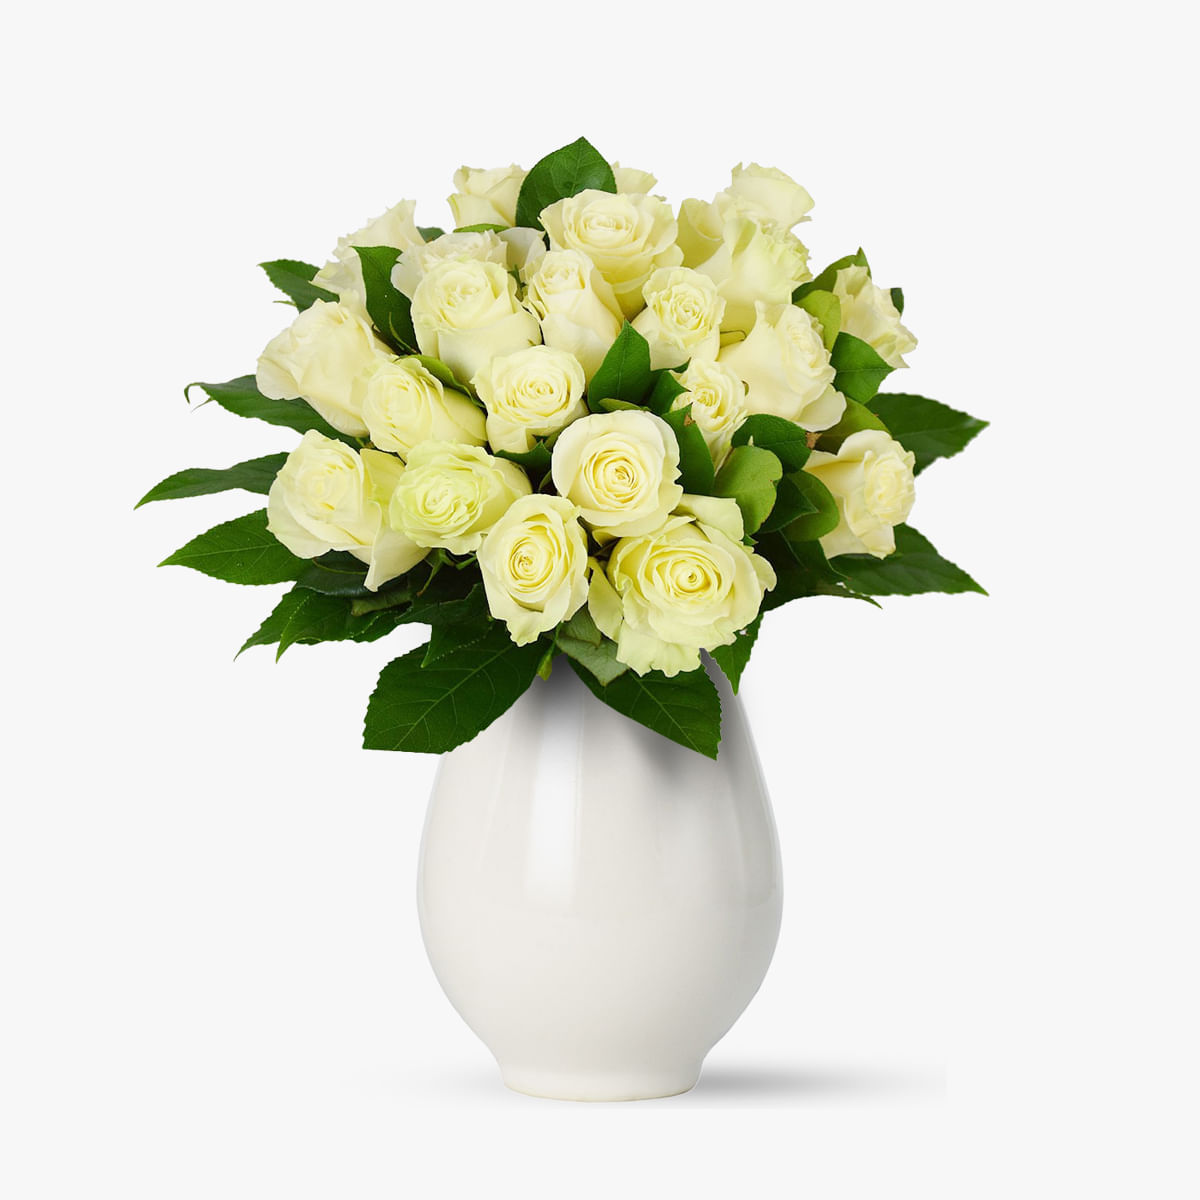 Buchet de 17 trandafiri albi floria.ro